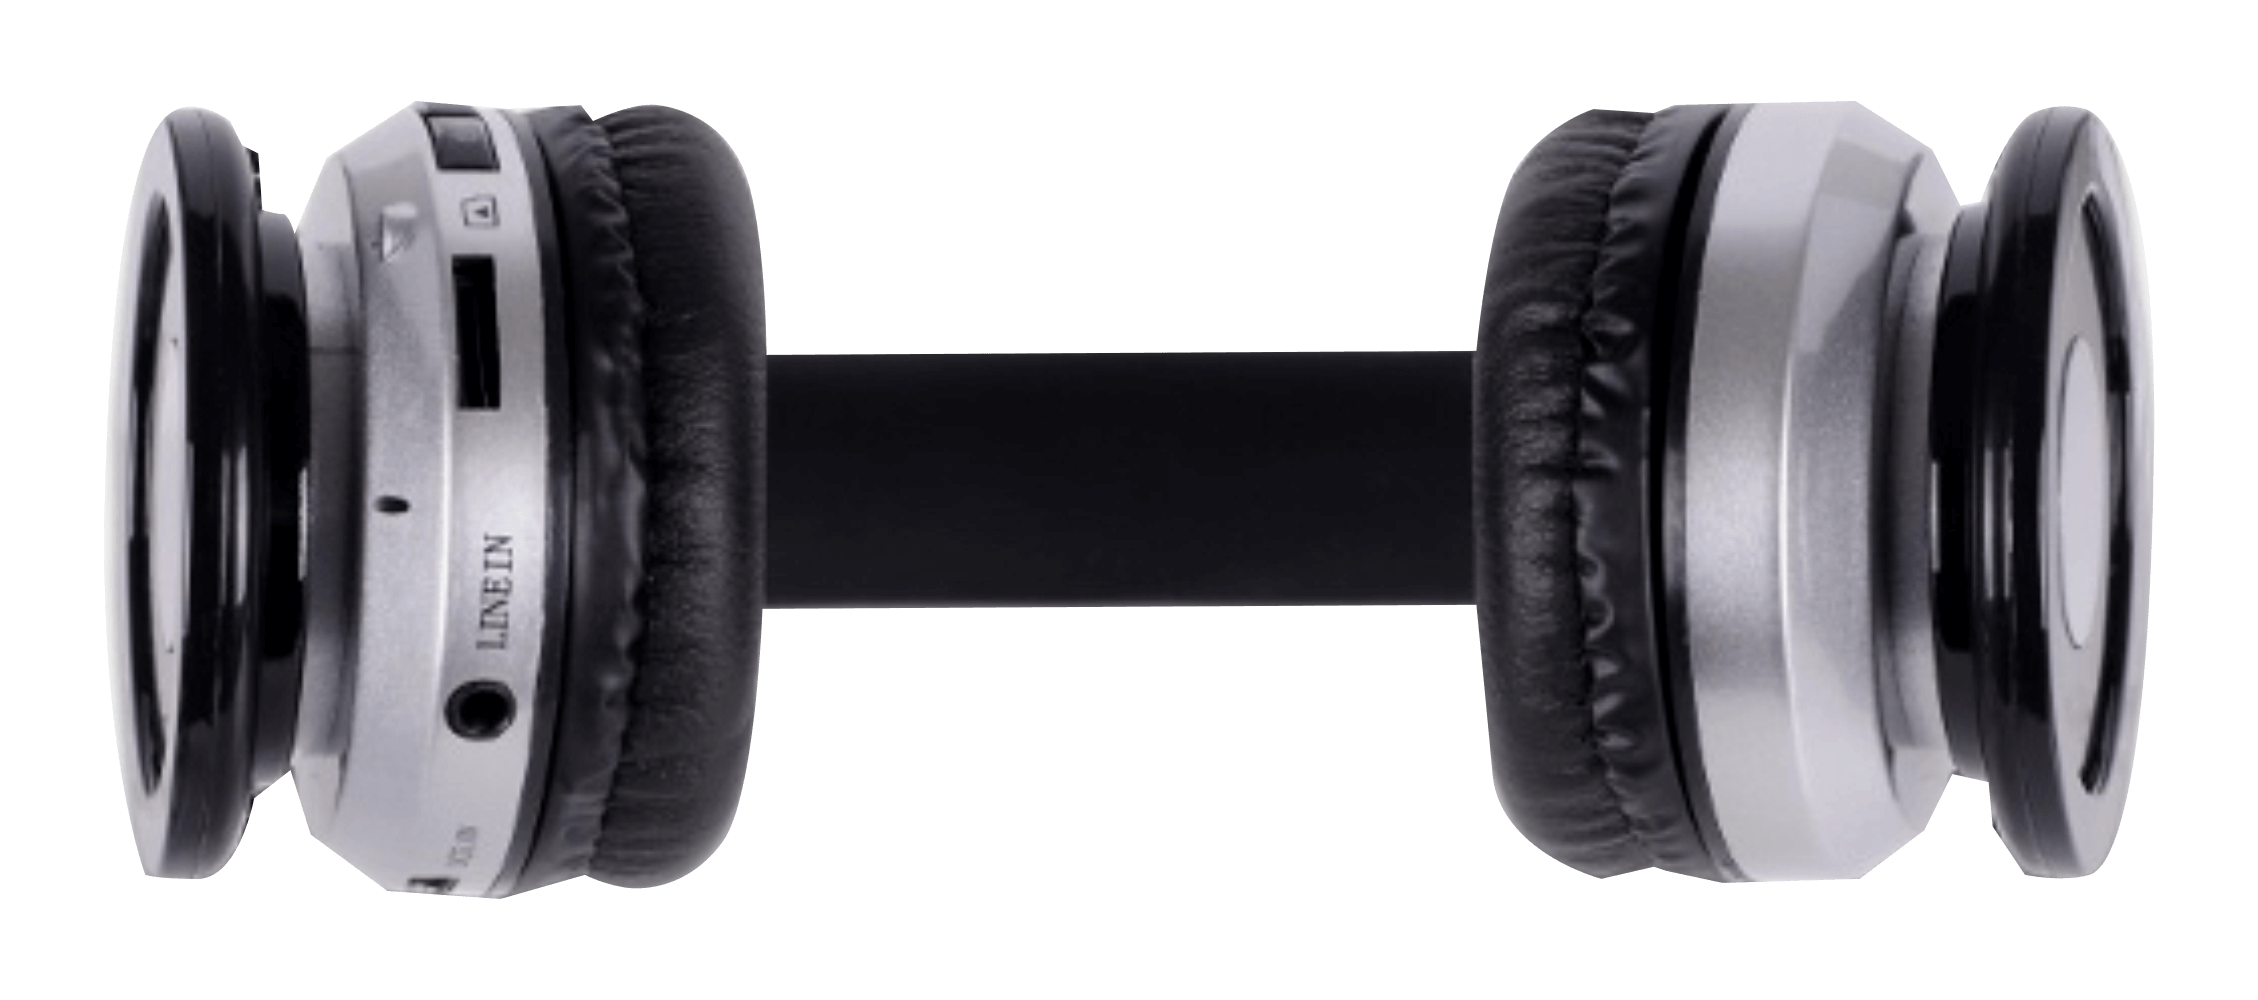 LG K10 2017 (M250N) bluetooth fejhallgató Rebeltec Crystal fekete